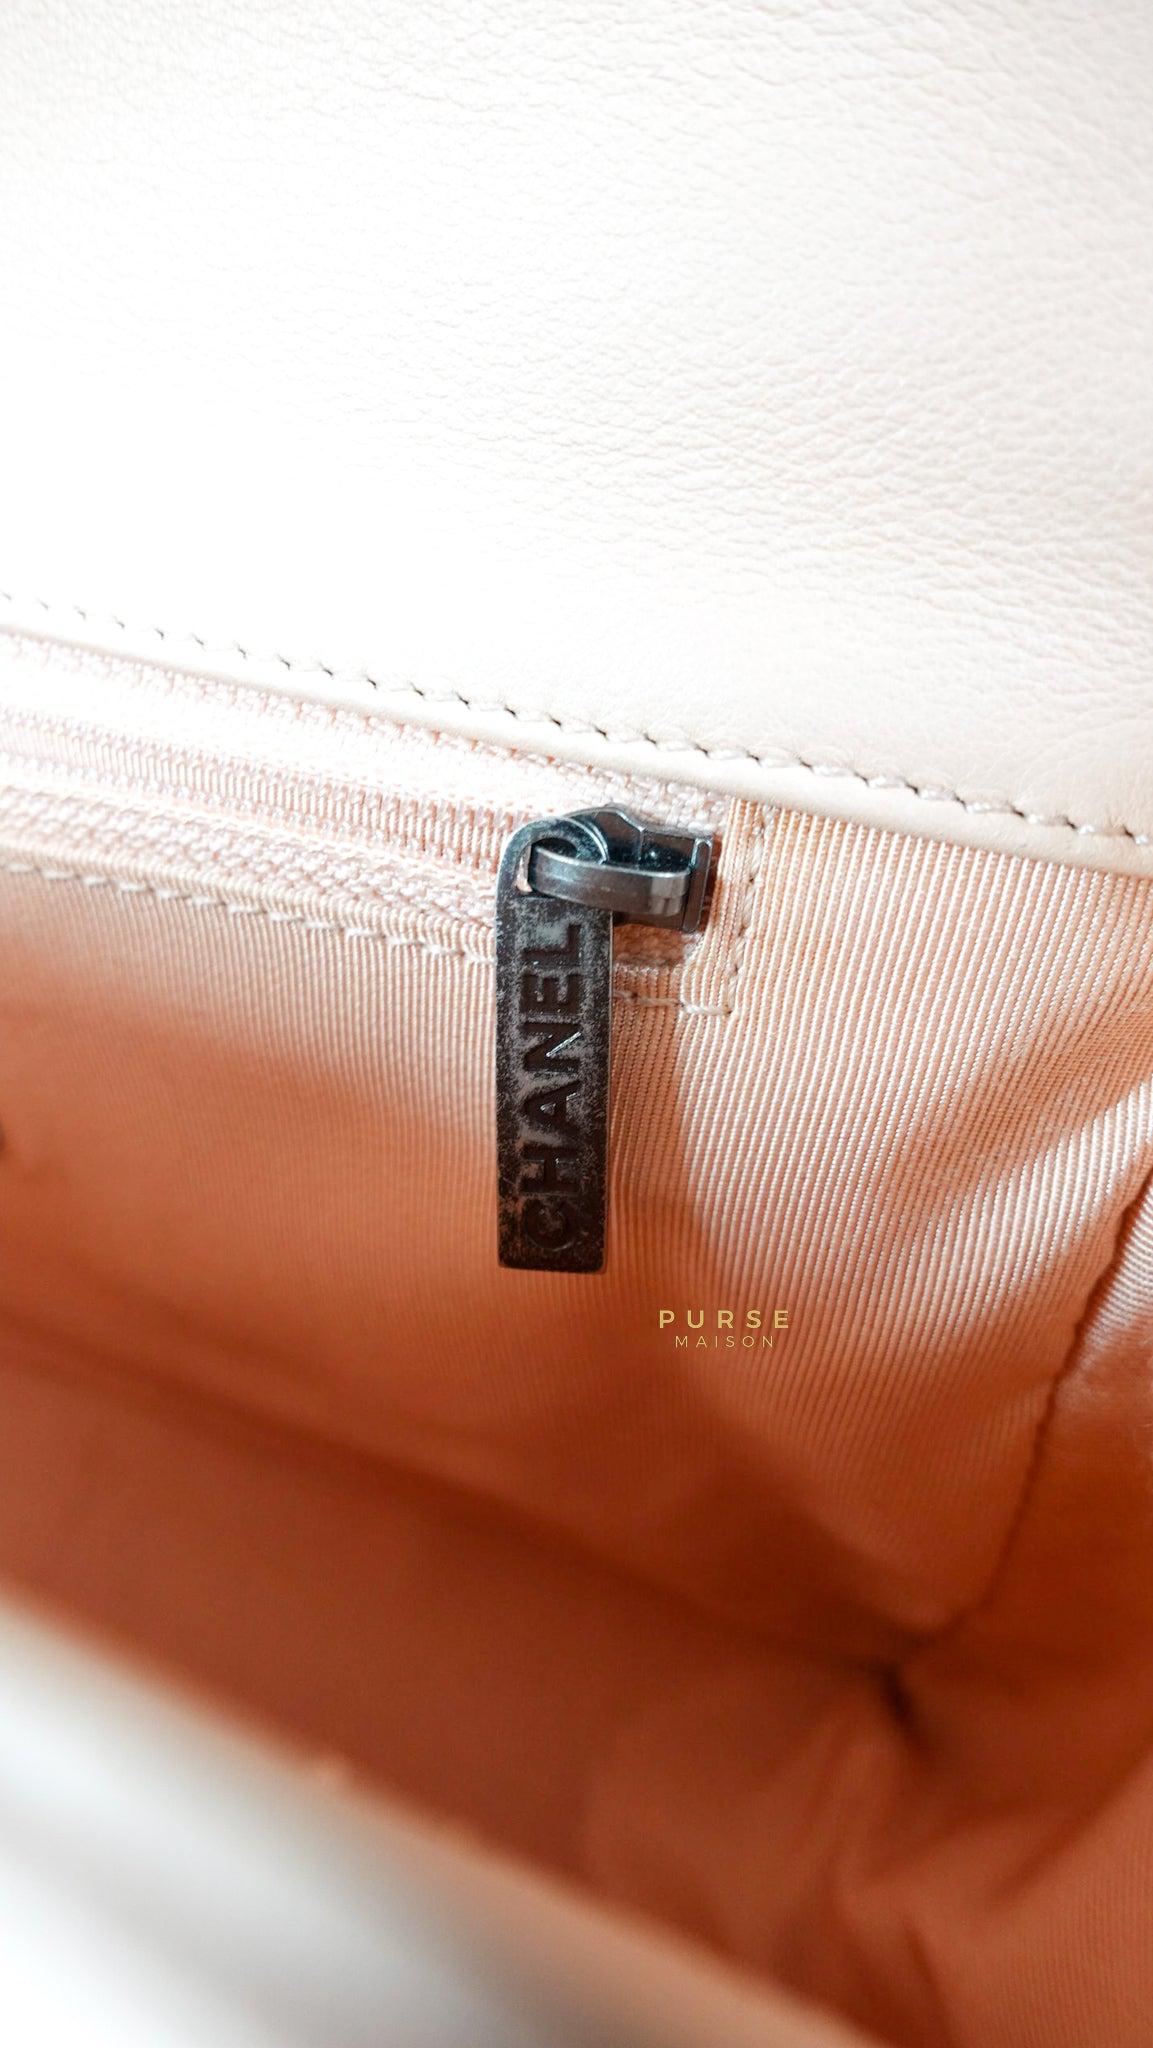 Chanel Boy New Medium in Nude Beige Lambskin Leather & Ruthenium Hardware (Series 19)